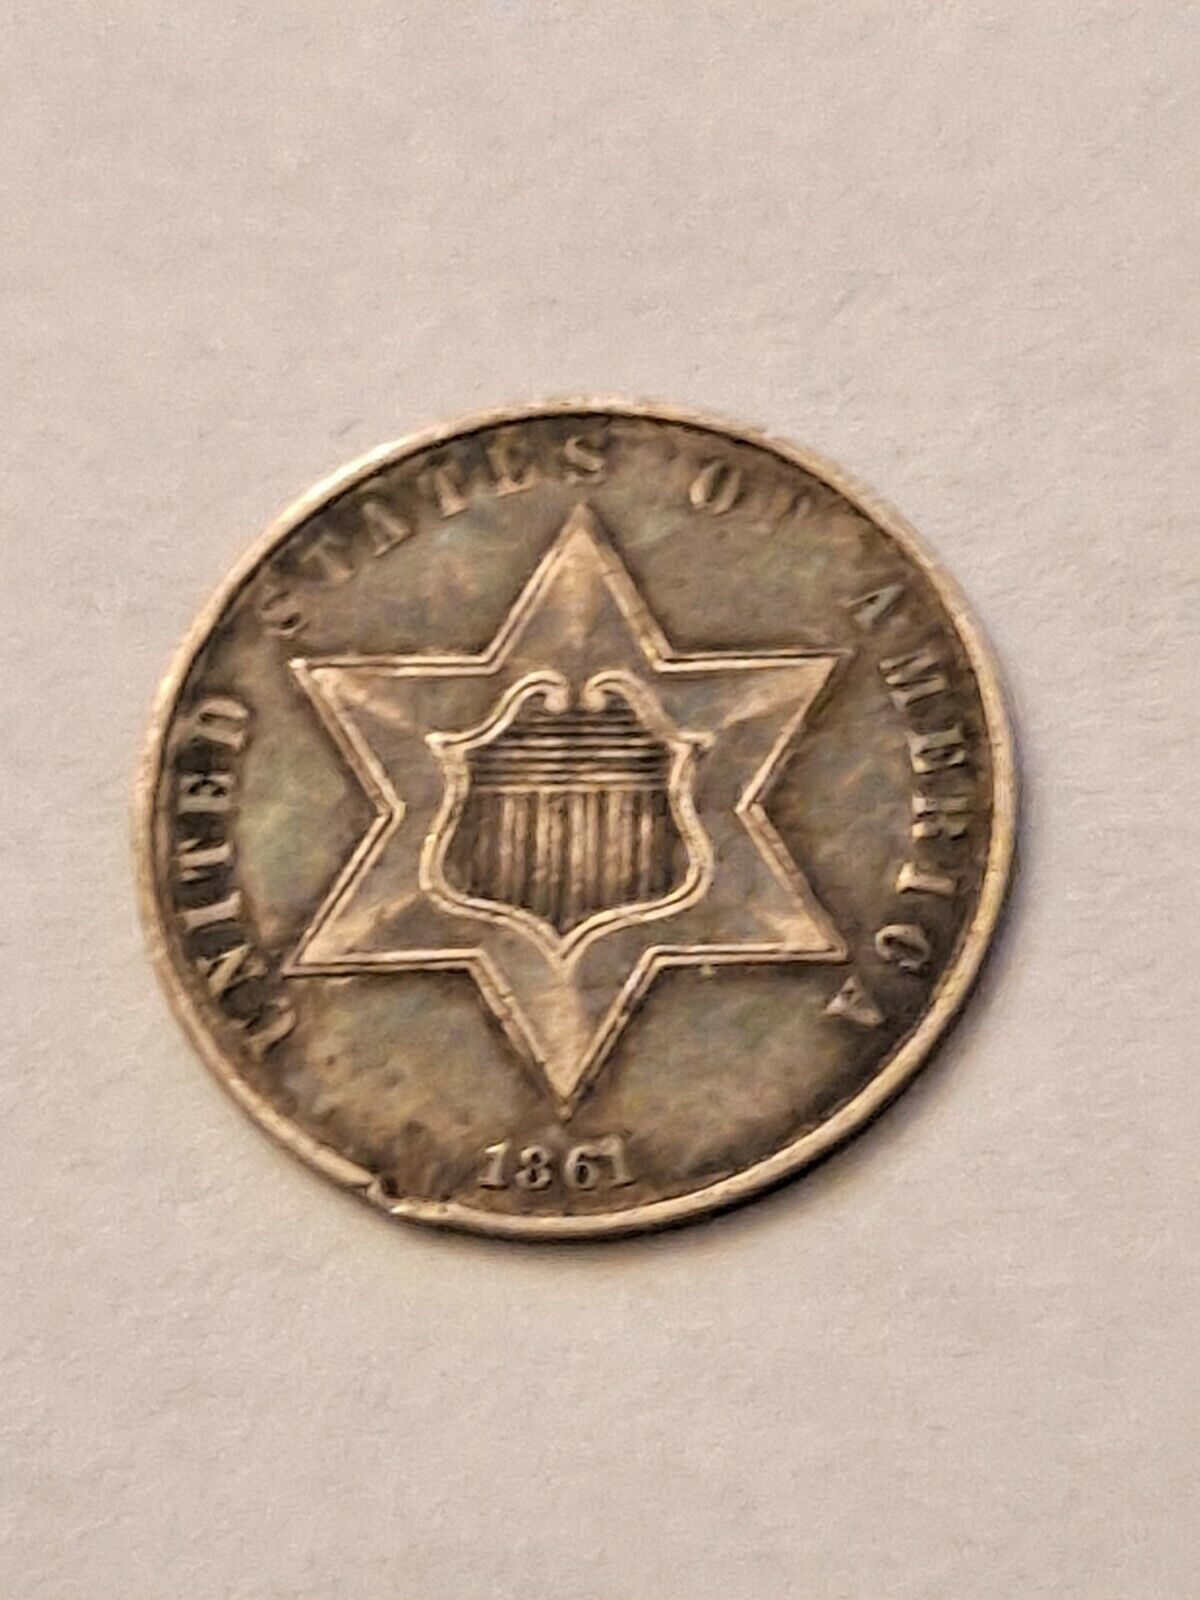 Rare 1861 Us Silver 3 Cent Coin